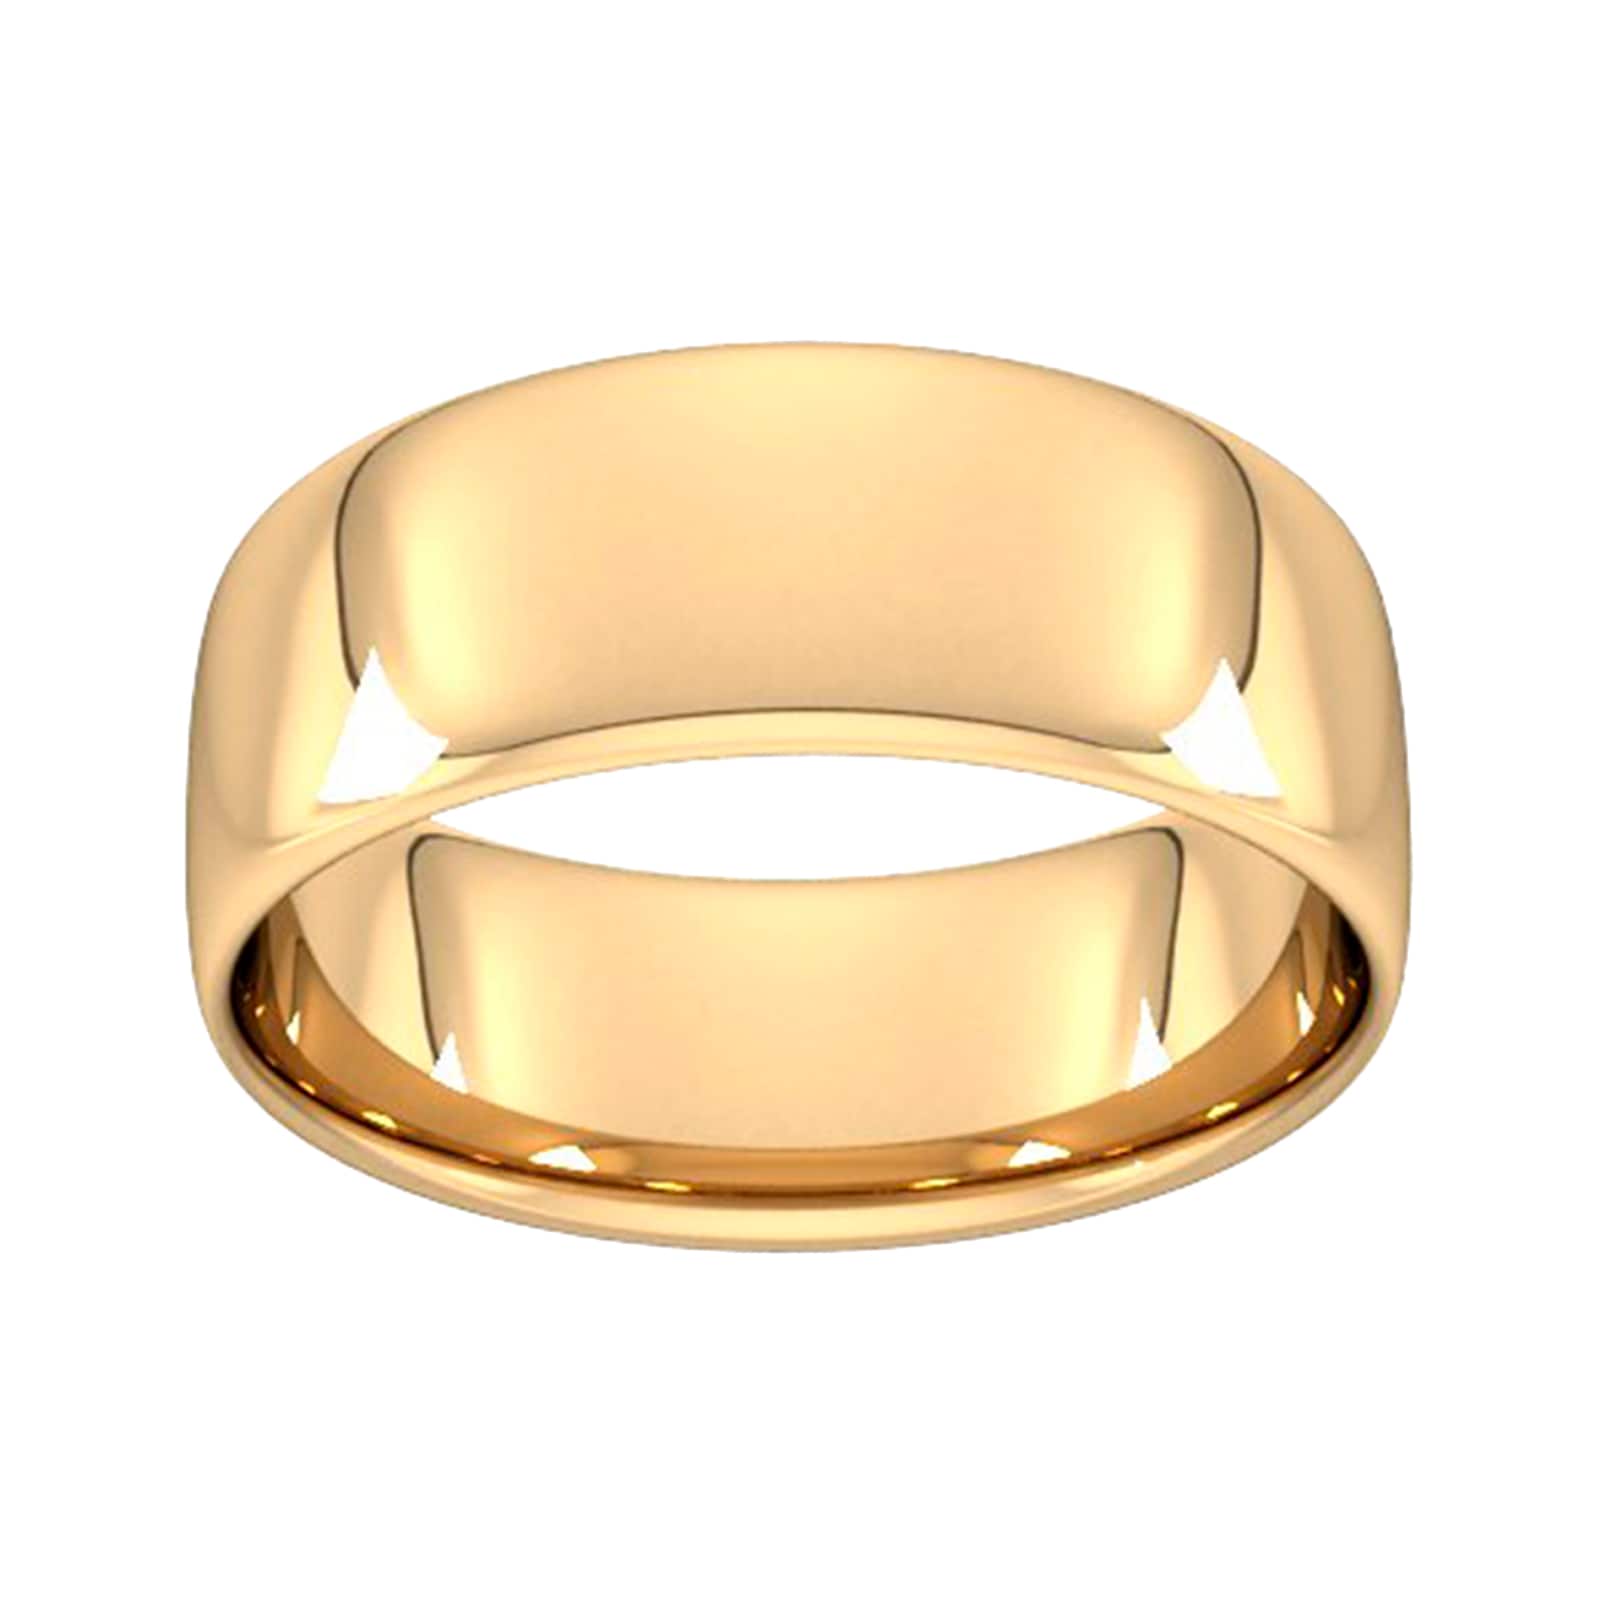 8mm Slight Court Standard Wedding Ring In 9 Carat Yellow Gold - Ring Size J